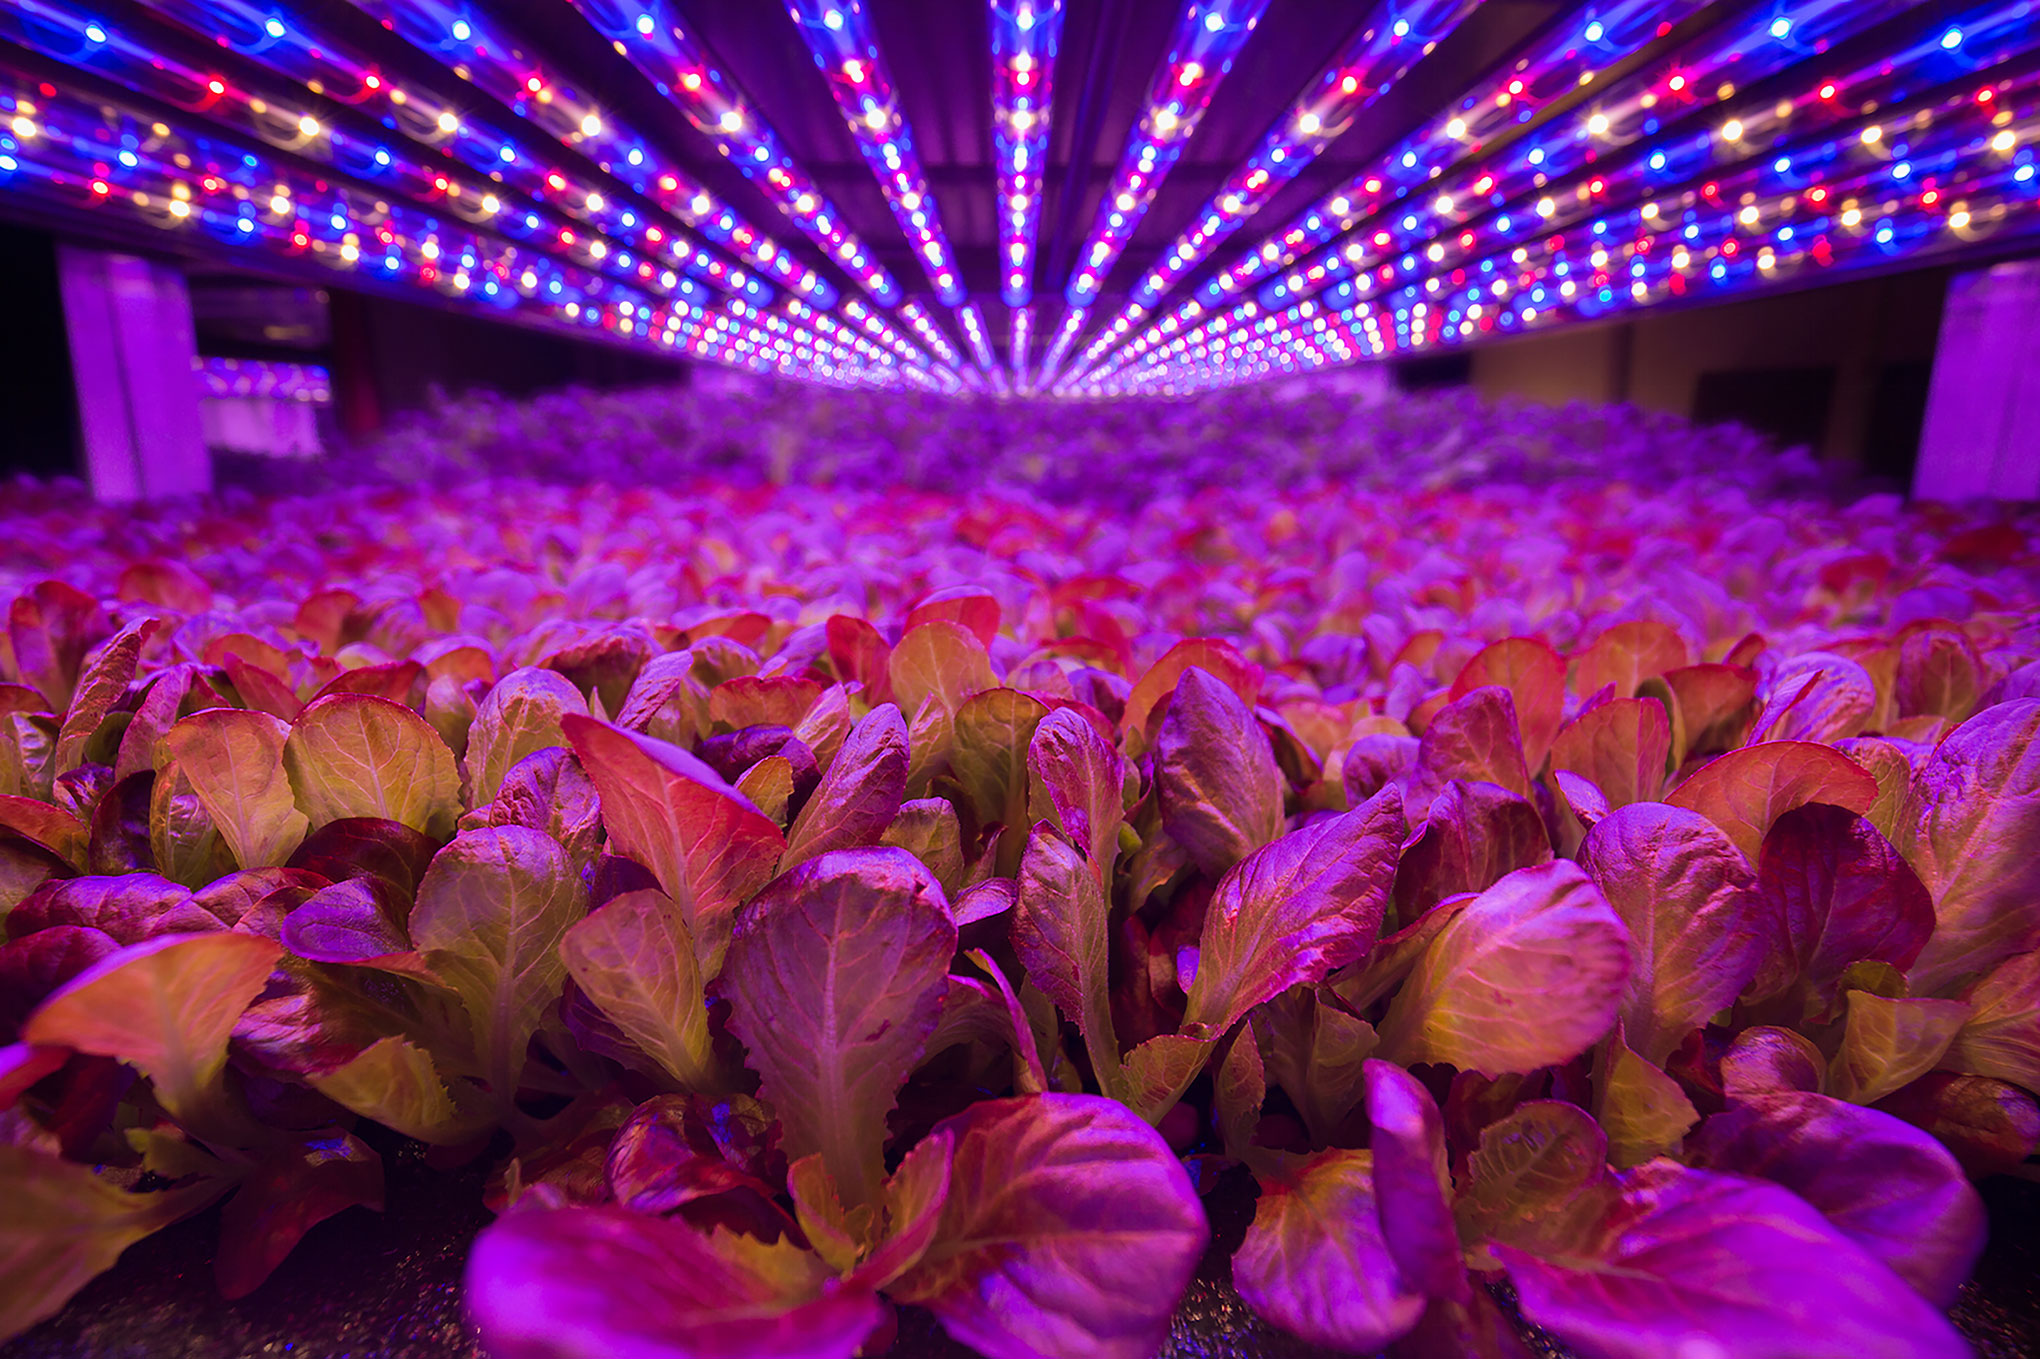 Leafy greens grow under LED lights in an indoor vertical farm run by Aerofarms (Courtesy Aero Farms)